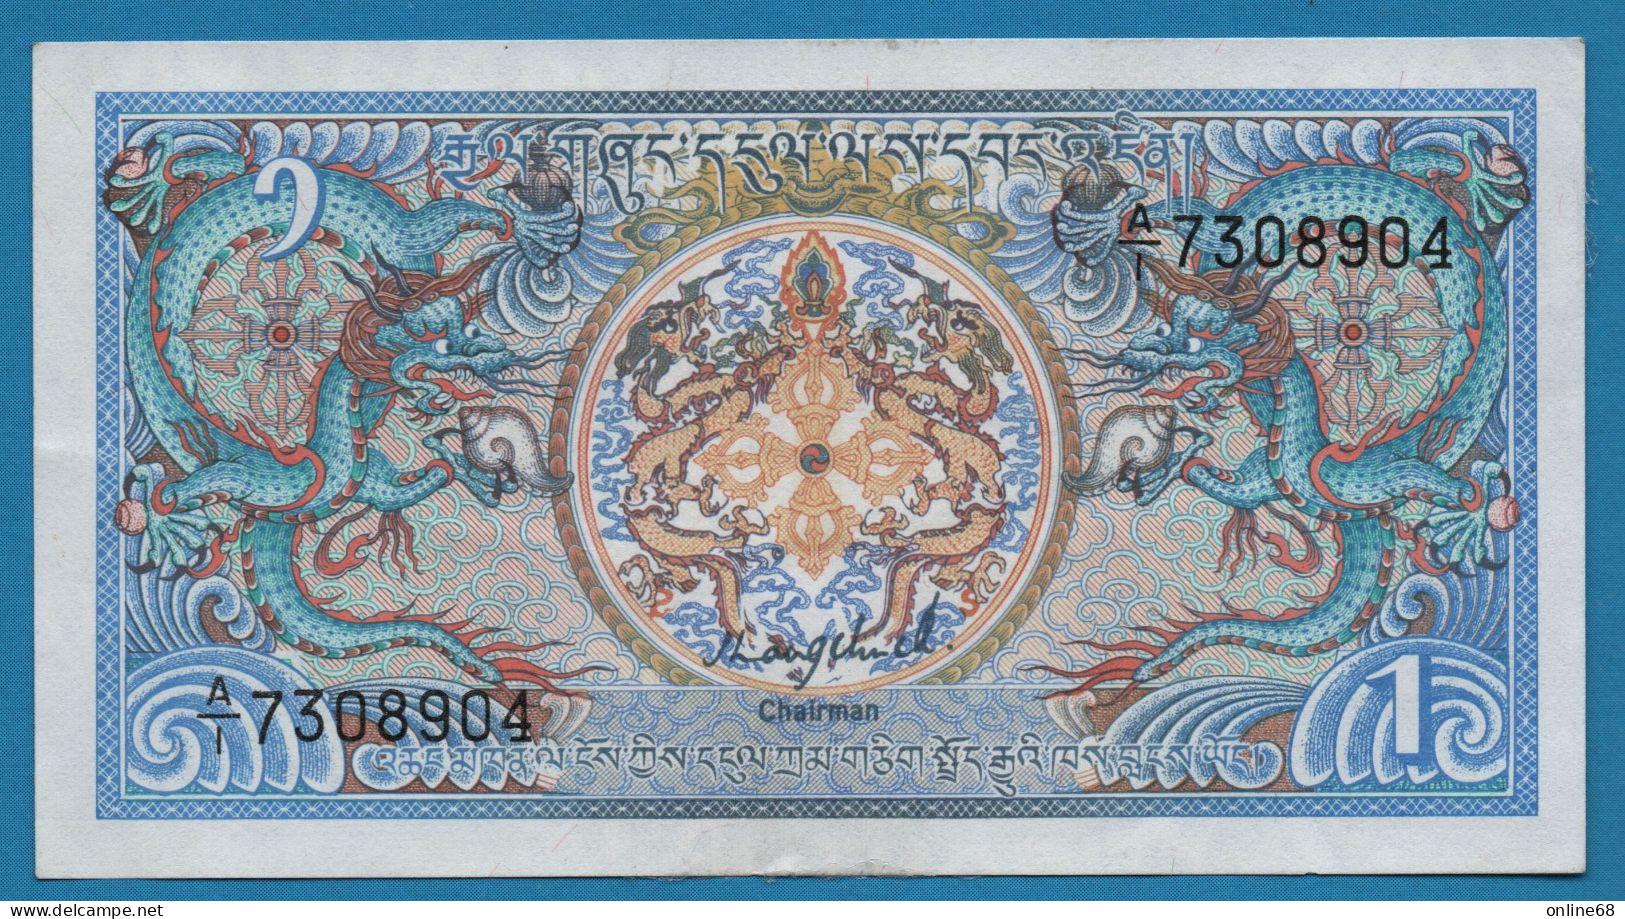 BHUTAN 1 NGULTRUM ND (1986) # A/1 7308904 P# 12a Dragons - 1974-94 Australia Reserve Bank (papier)